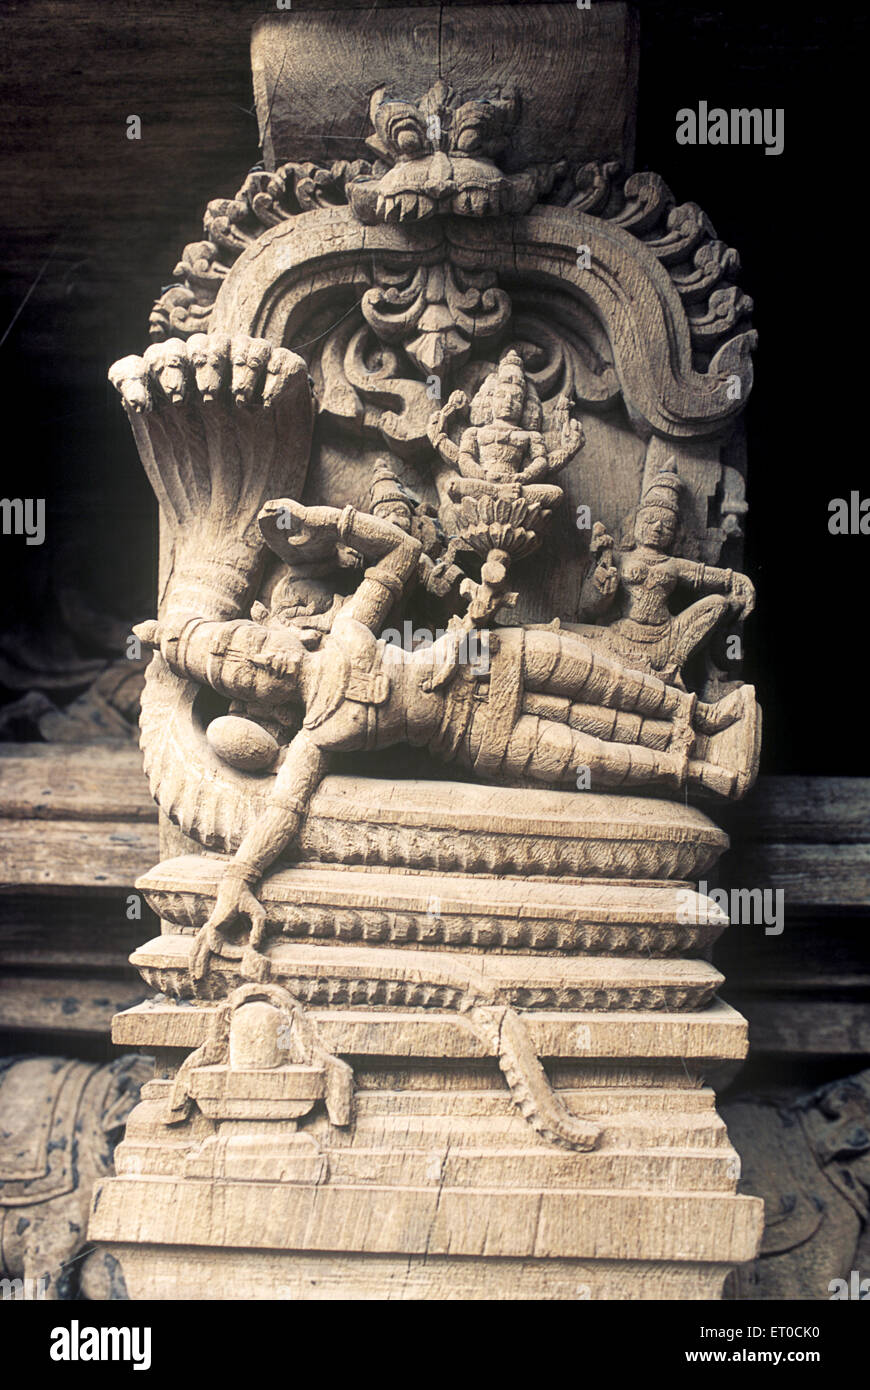 Ananthapadmanabha vishnu sleeping on serpent wooden carving statue in old temple chariot at Madurai ; Tamil Nadu ; India ; asia Stock Photo